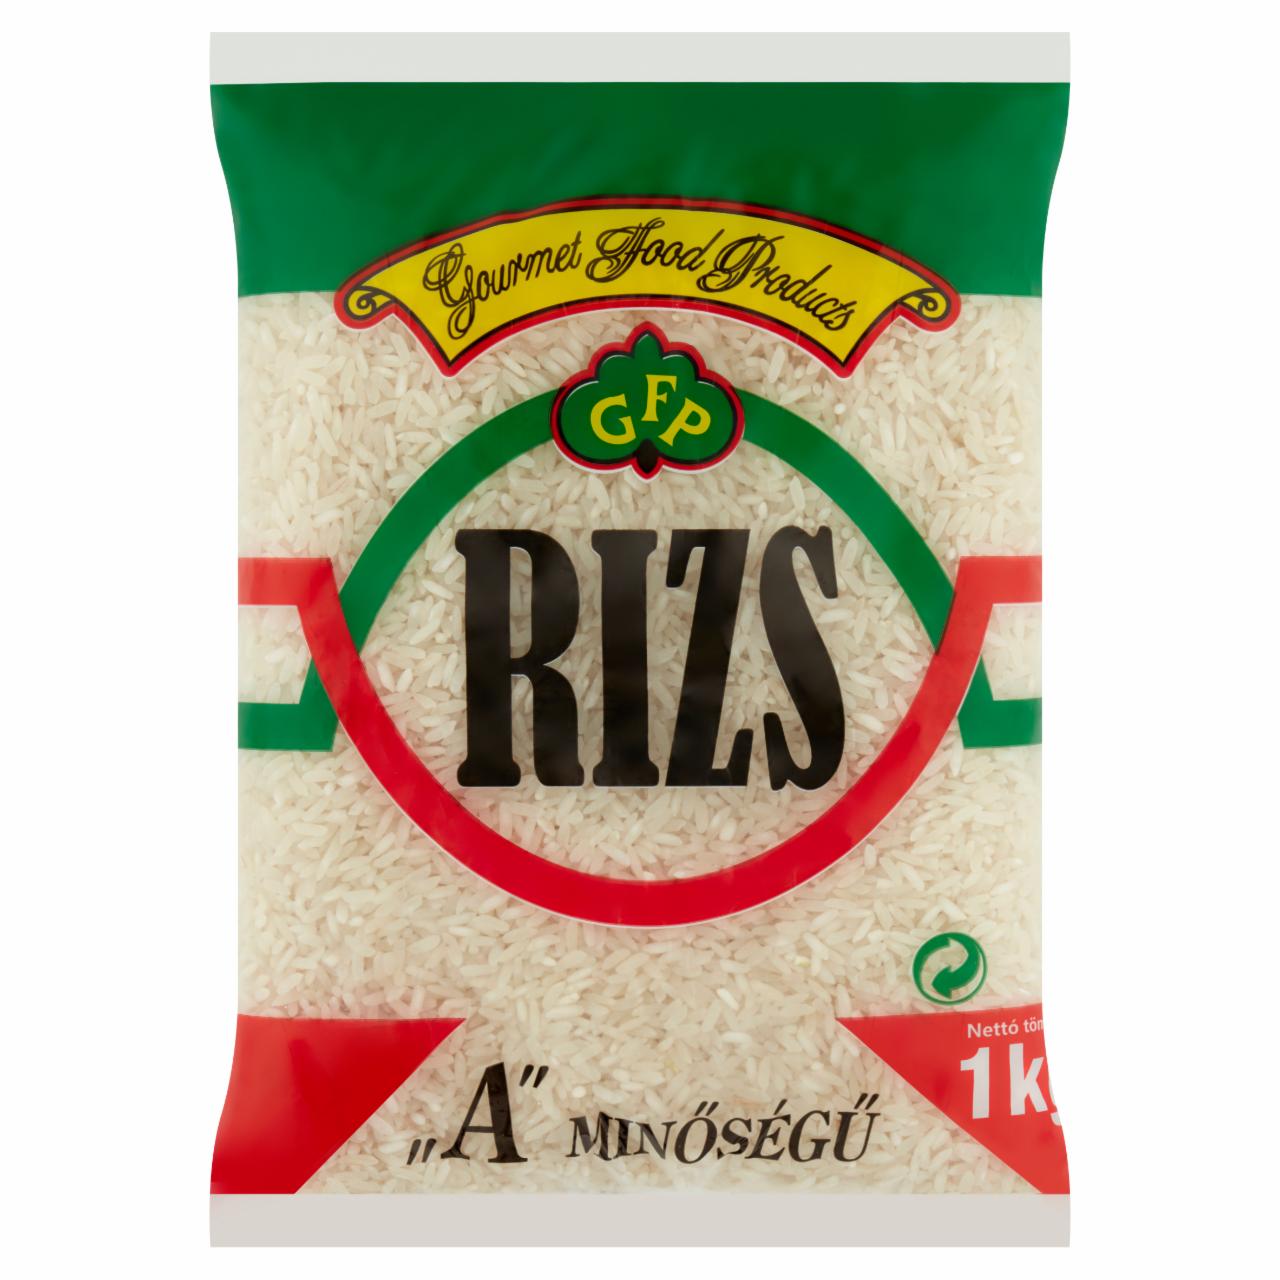 Képek - GFP 'A' minőségű rizs 1 kg